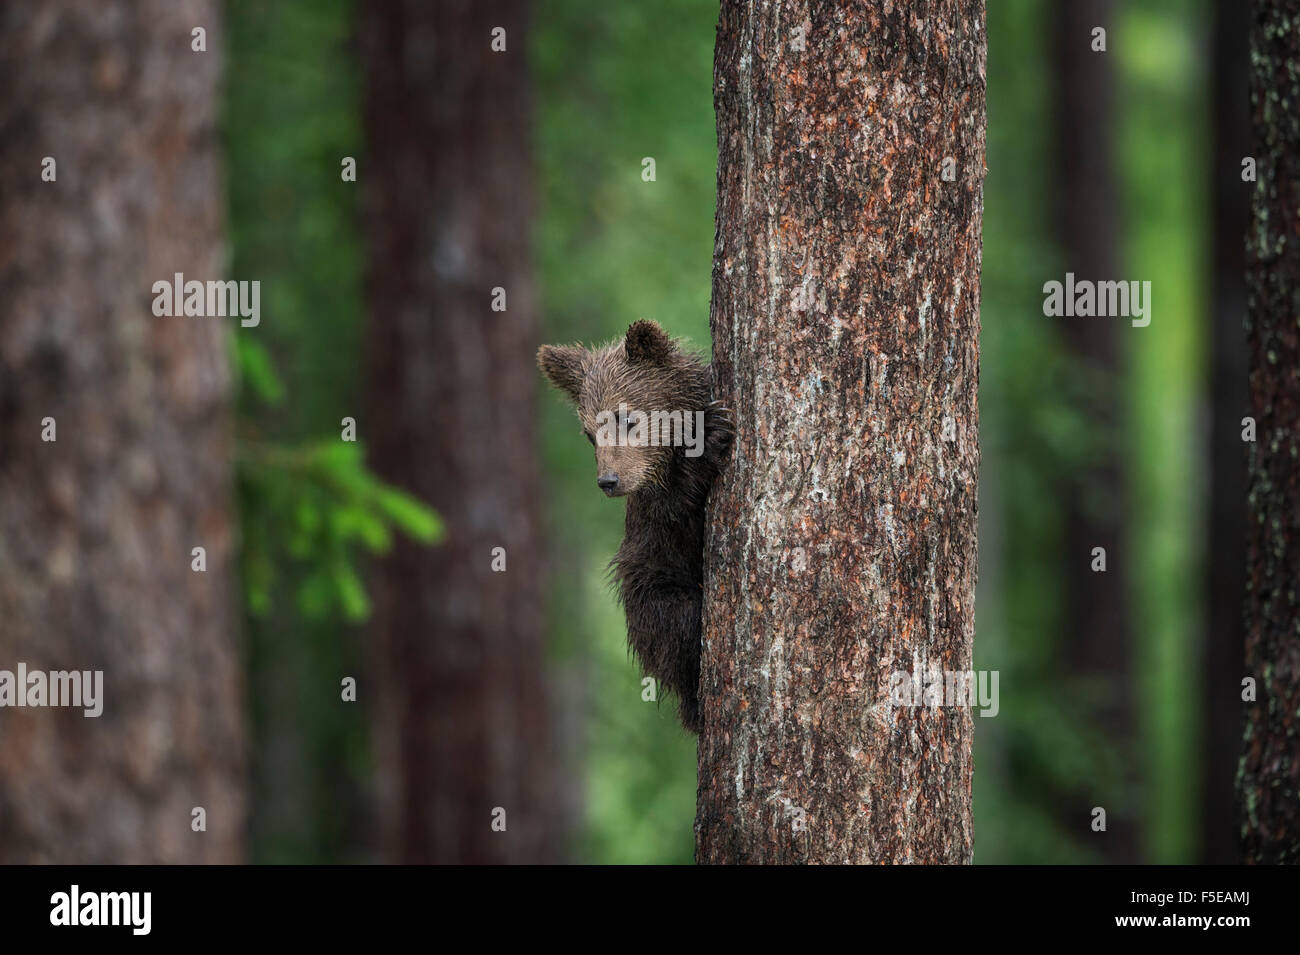 Brown bear cub (Ursus arctos) tree climbing, Finland, Scandinavia, Europe Stock Photo